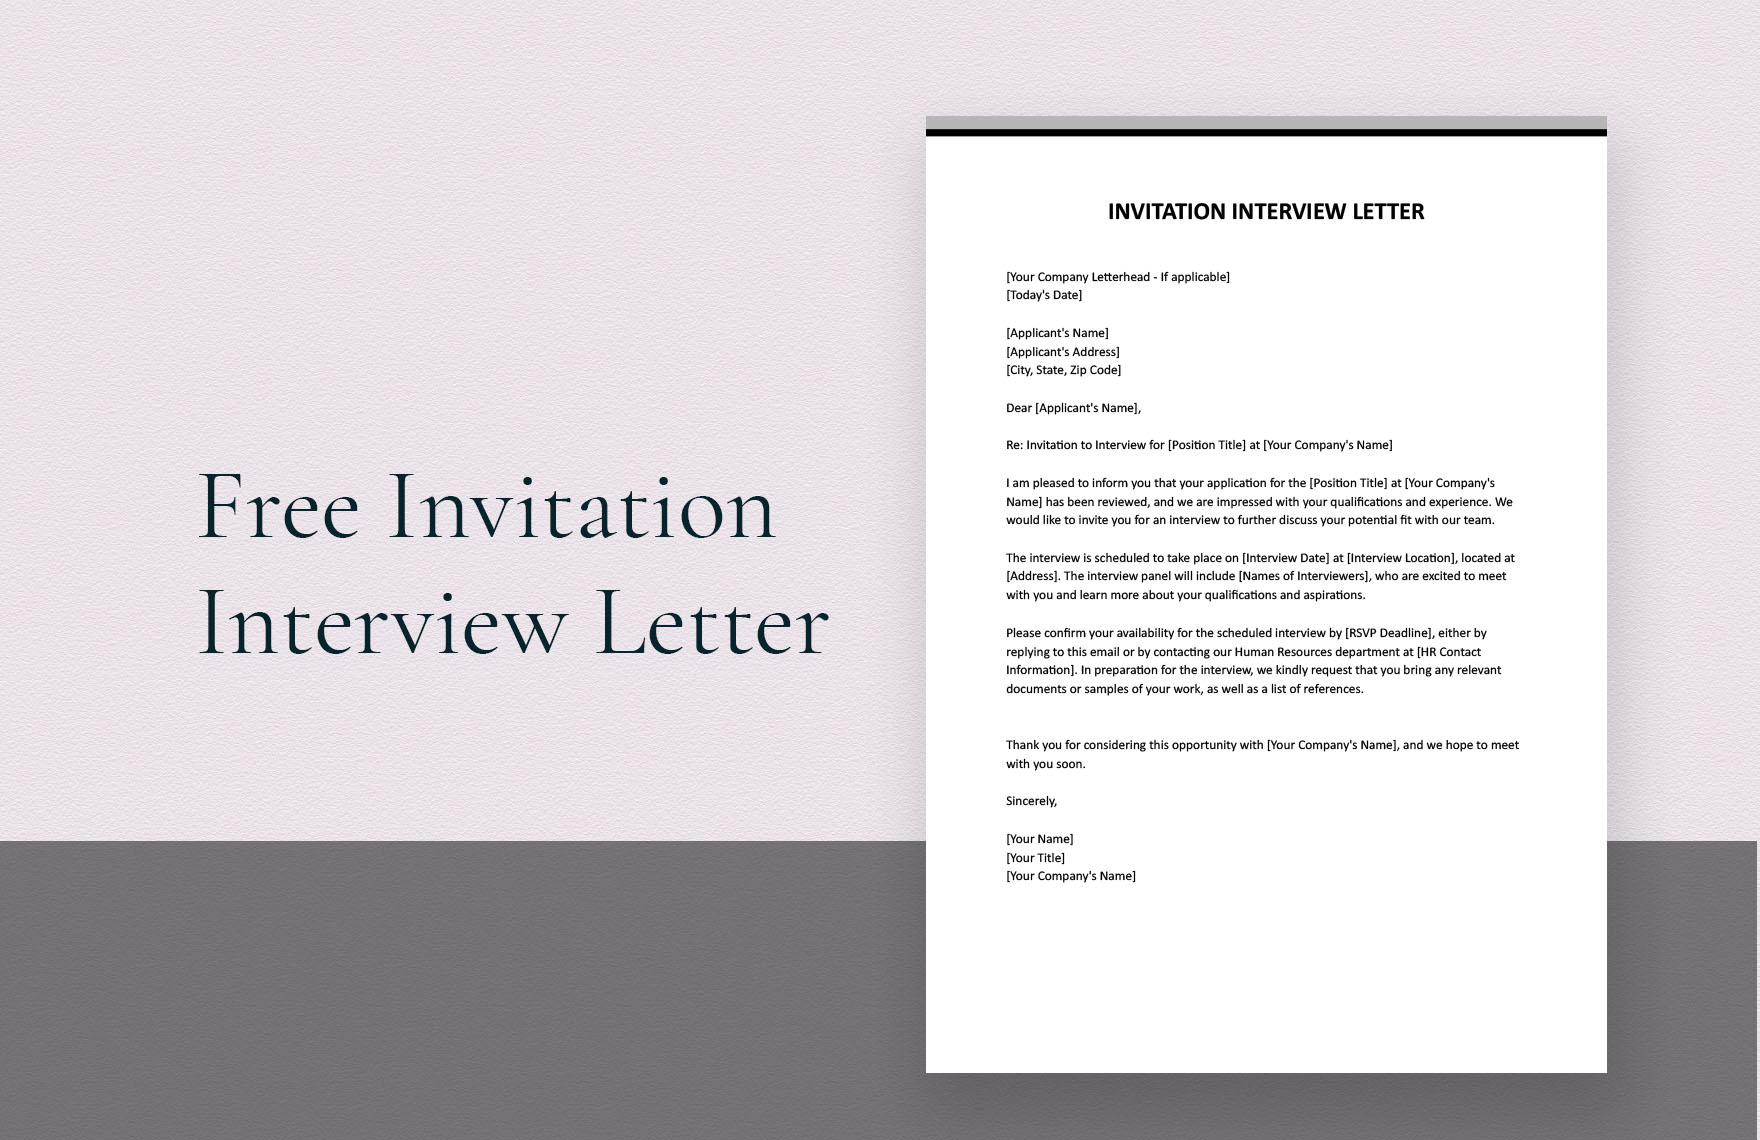 Free Invitation Interview Letter